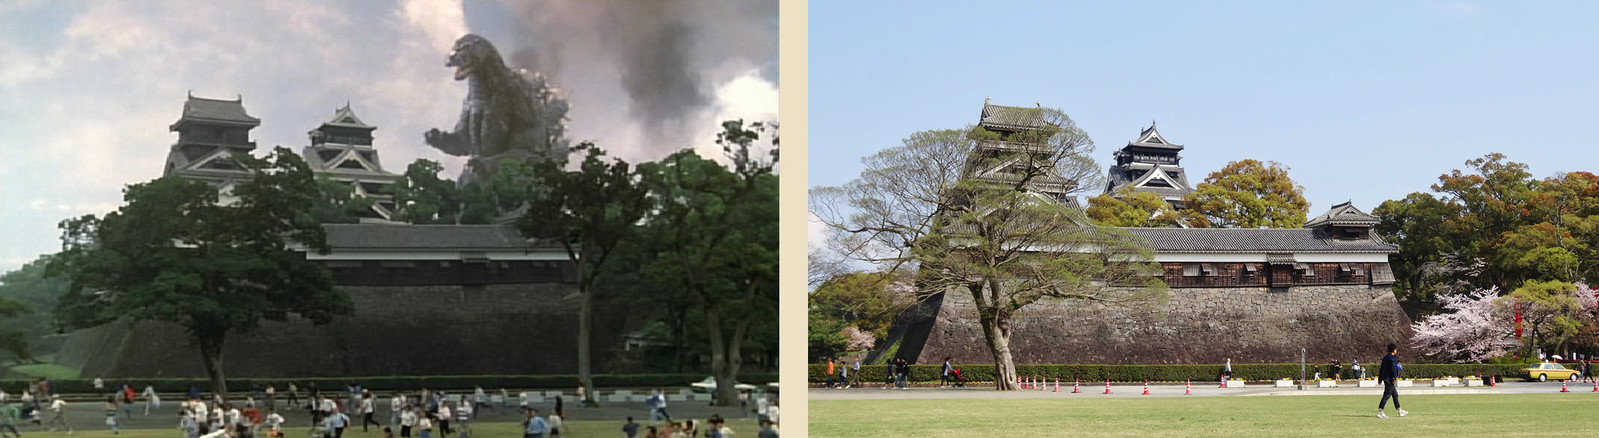 Godzilla vs SpaceGodzilla Kumamoto Location